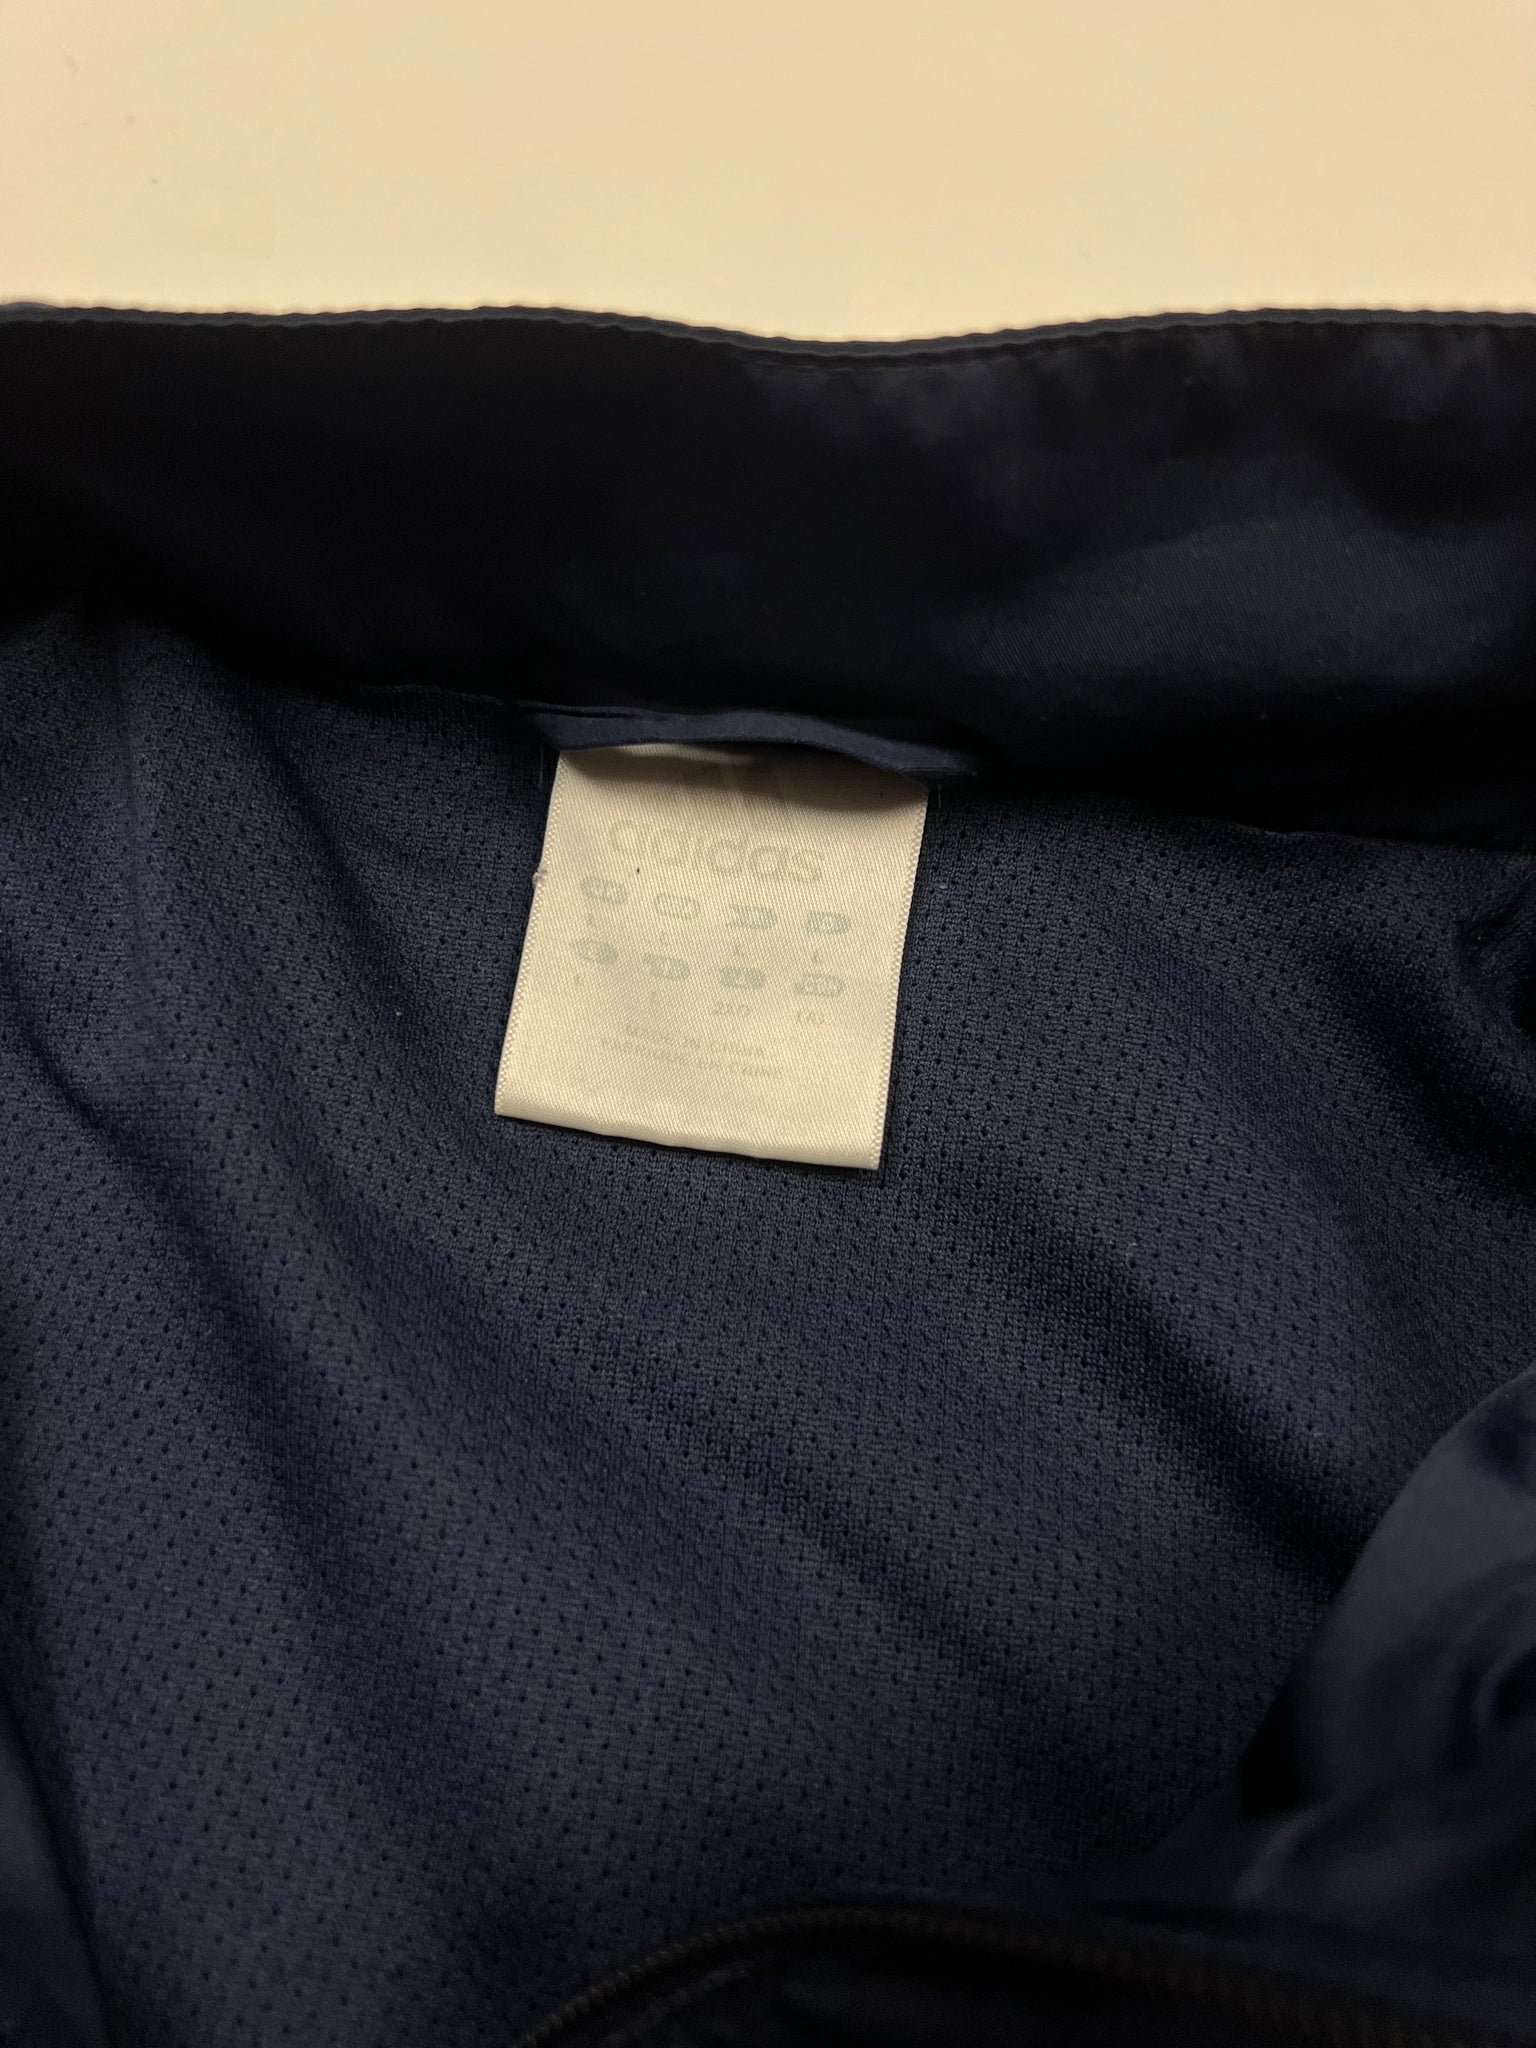 Adidas New York Yankees Jacket (L)